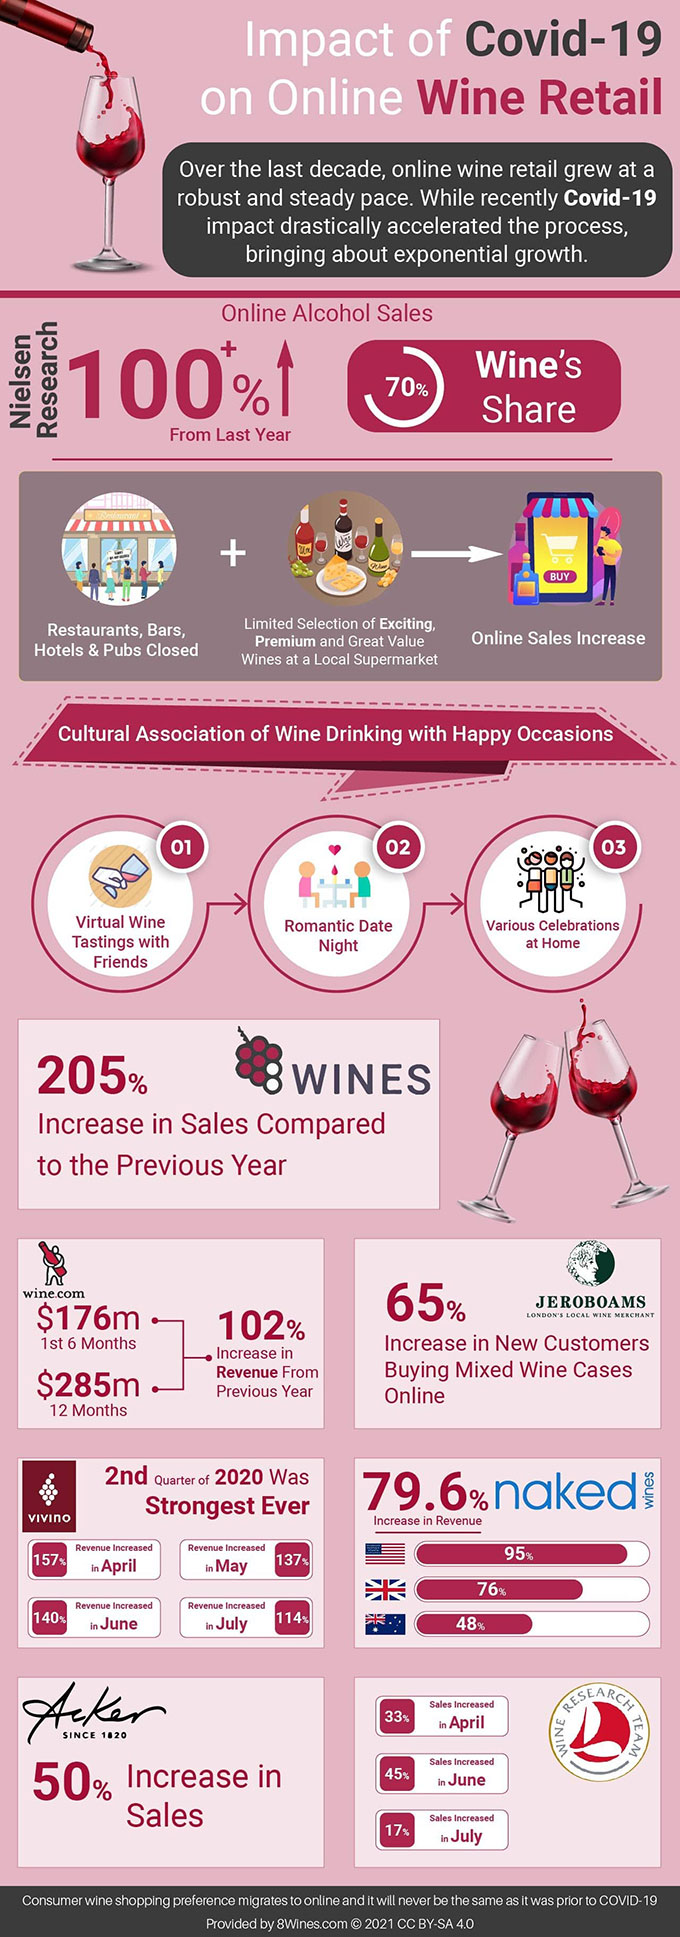 COVID-19 impact on wine retail